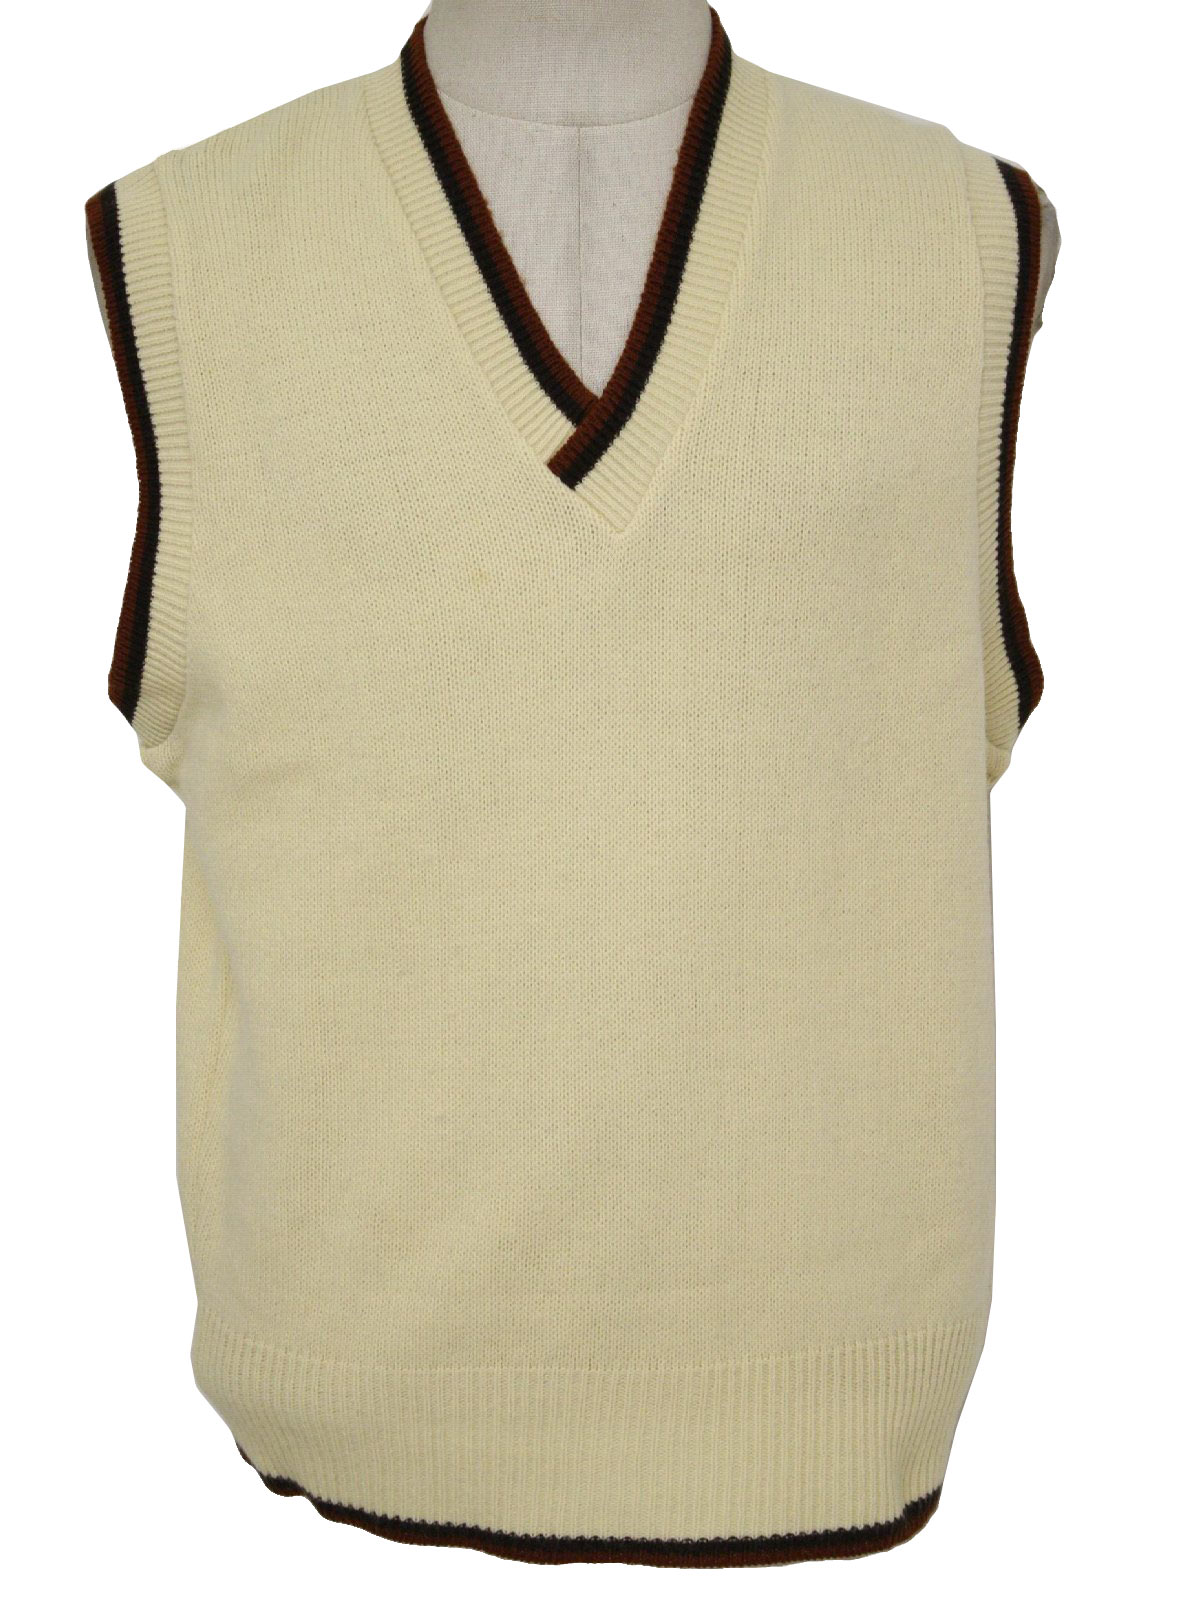 Retro 1970s Sweater: 70s -Sears Kings Road- Mens cream, brown ...